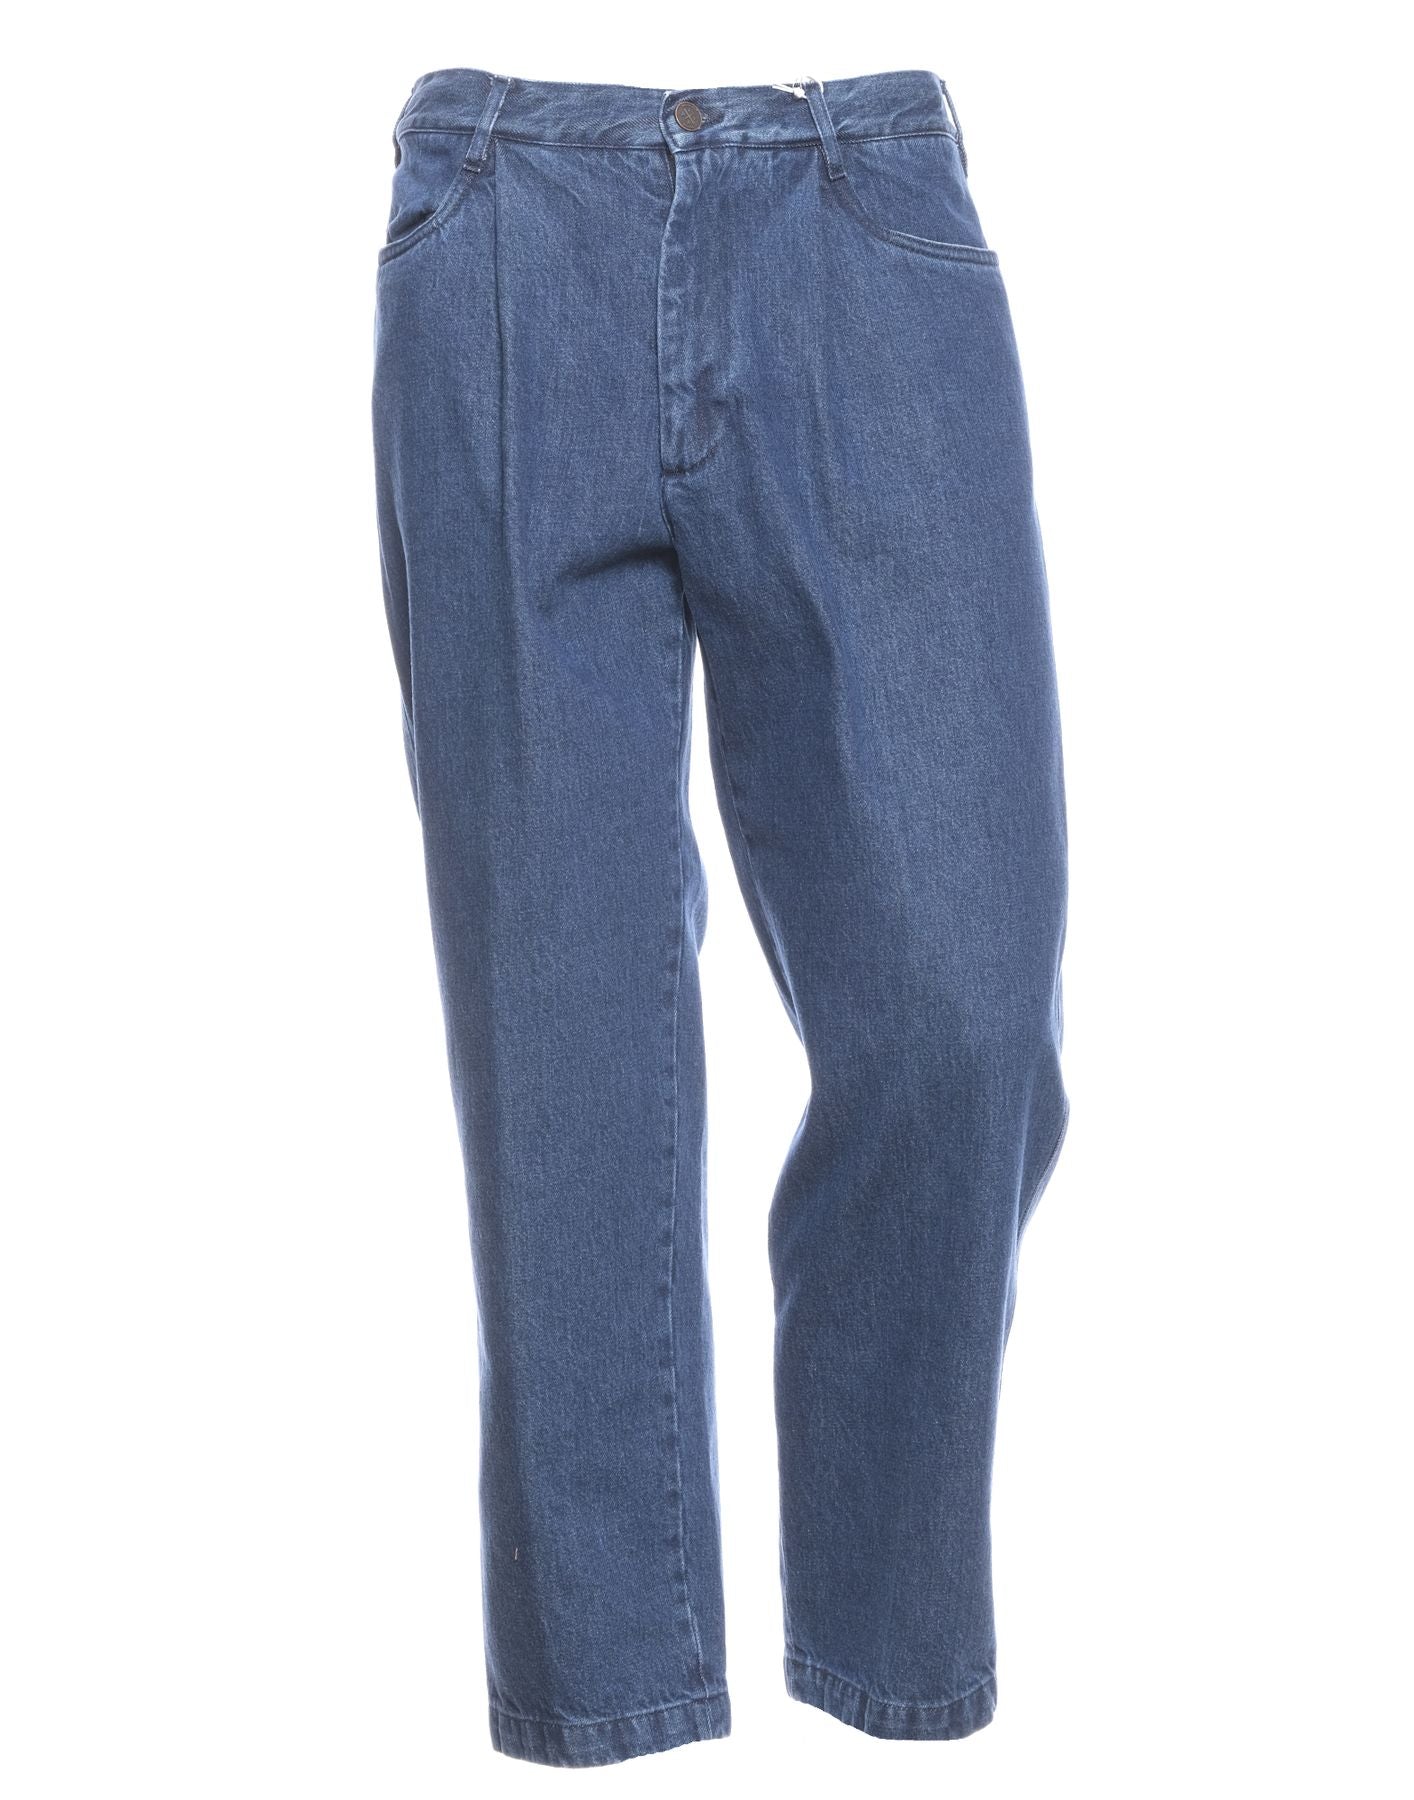 Jeans for man SA110338 PAT S69 CELLAR DOOR